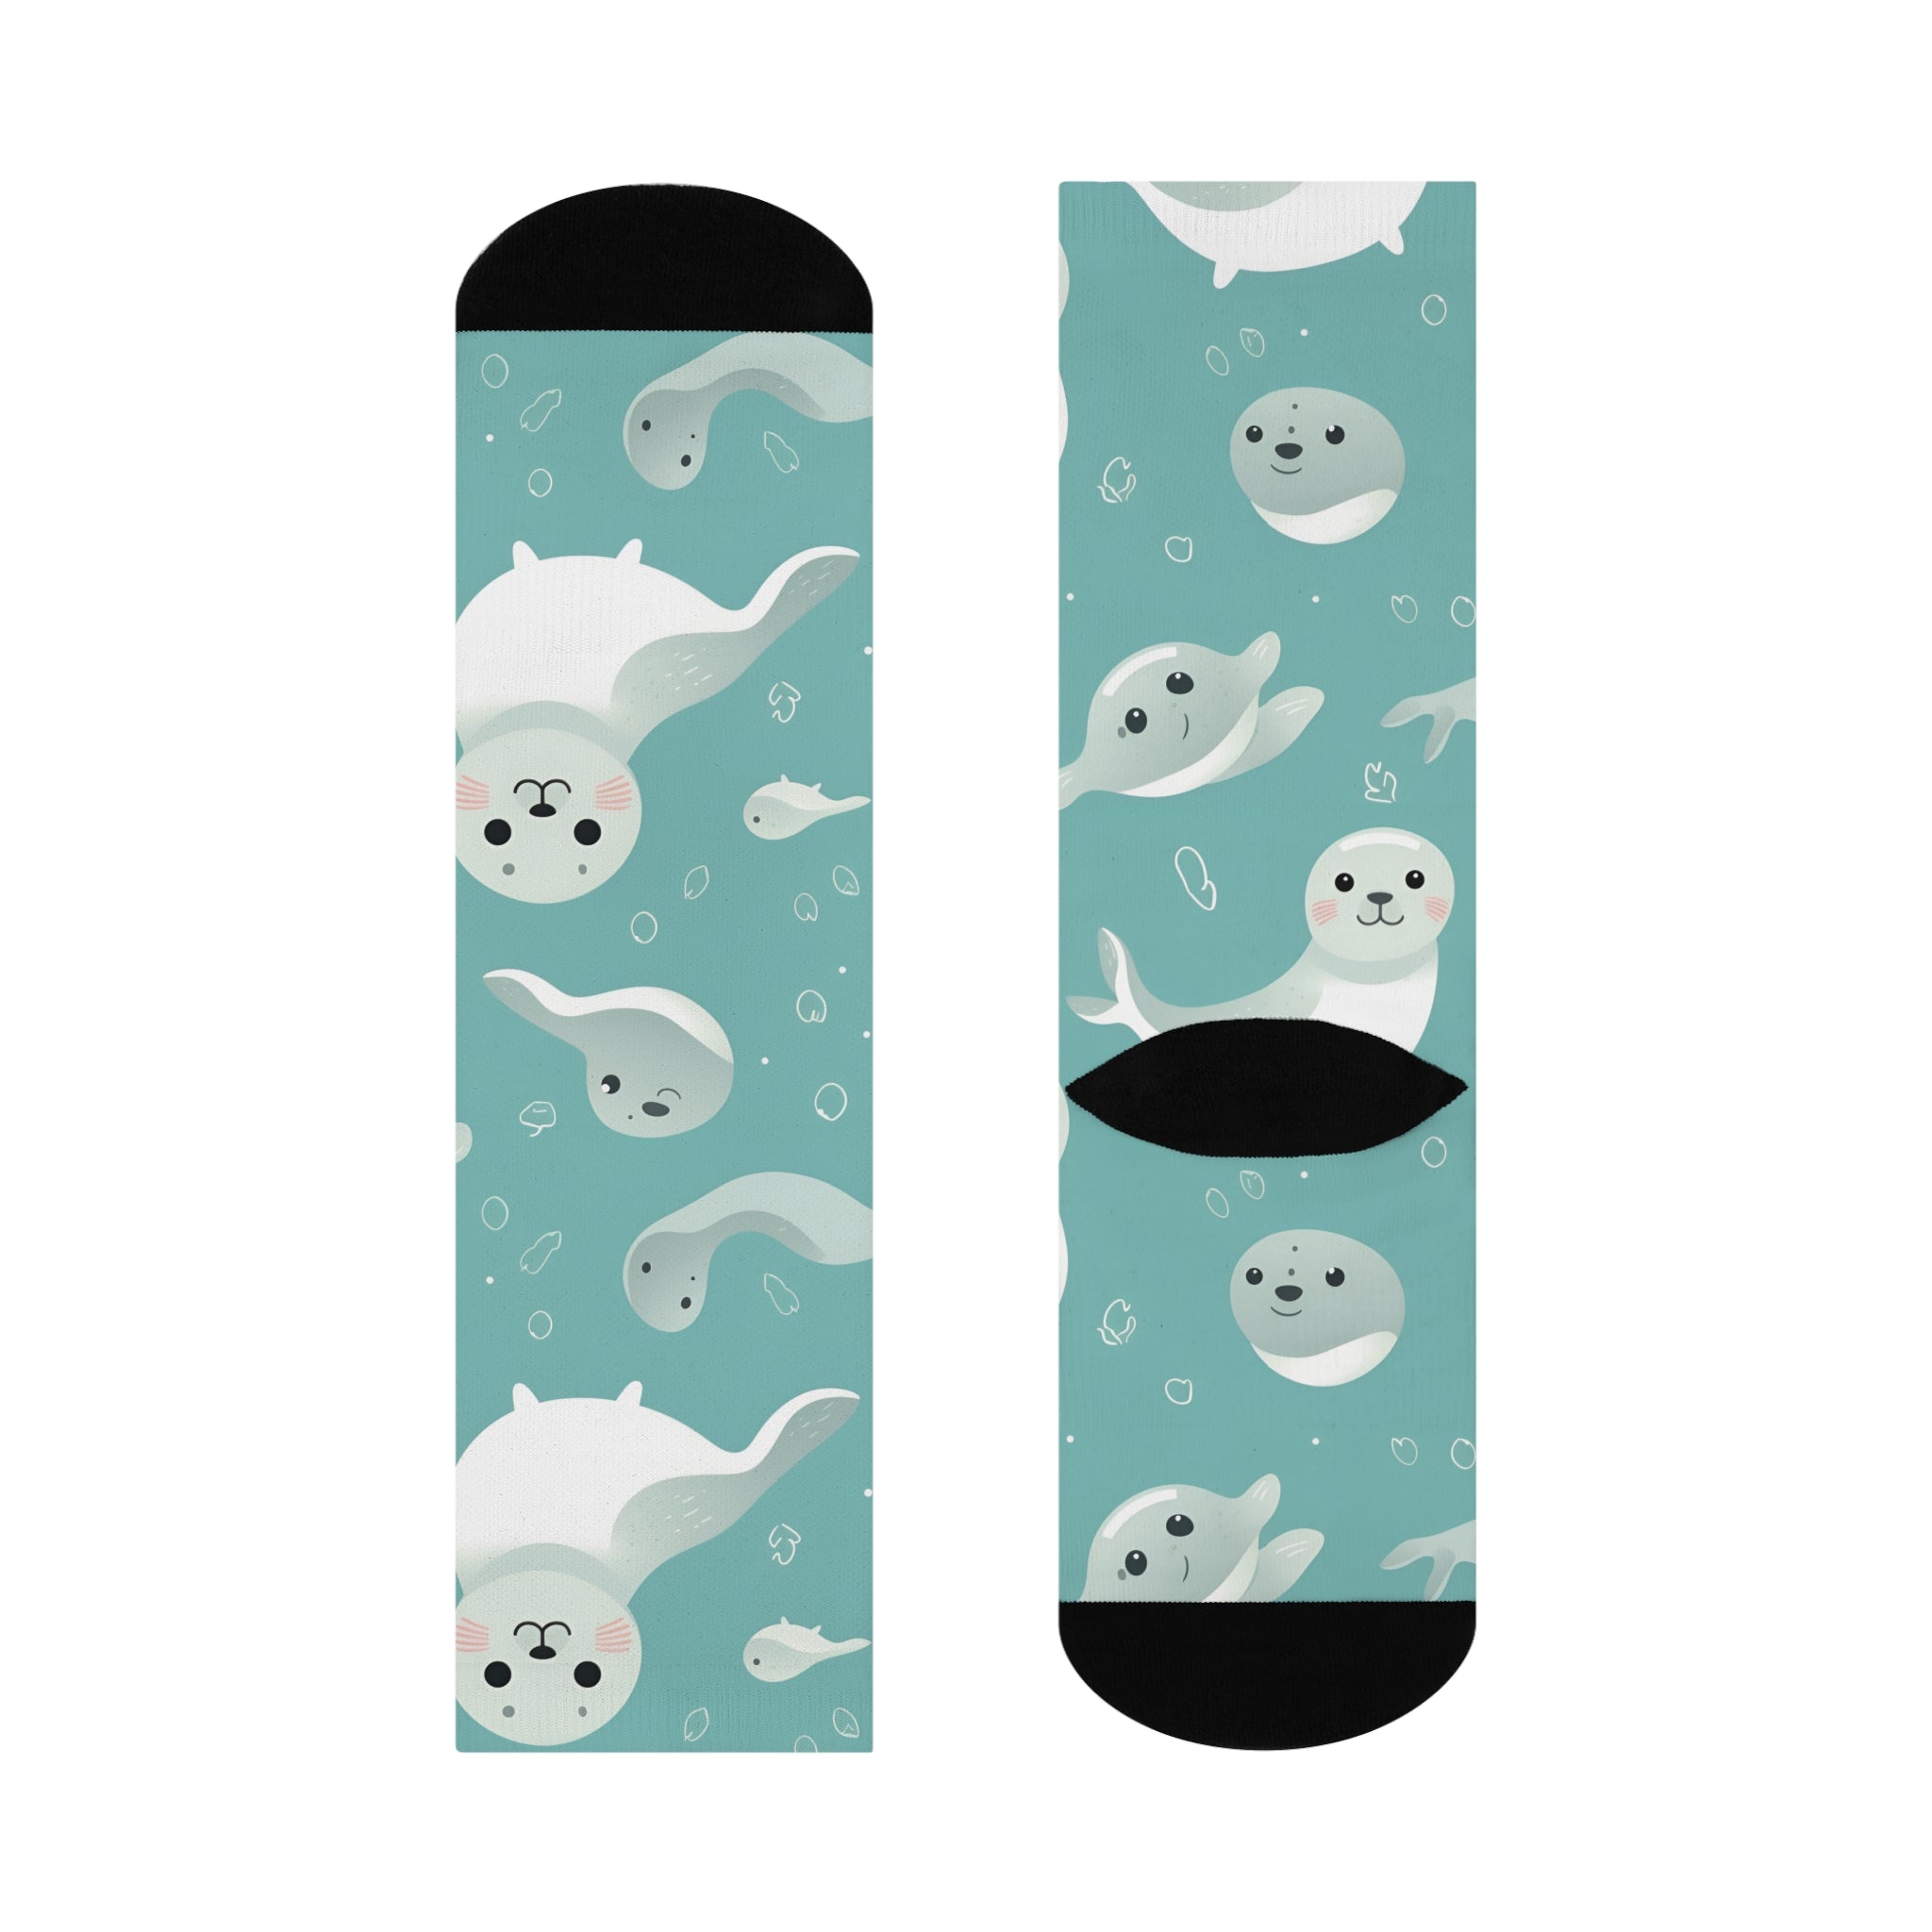 Baby Seal Cushioned Crew Socks